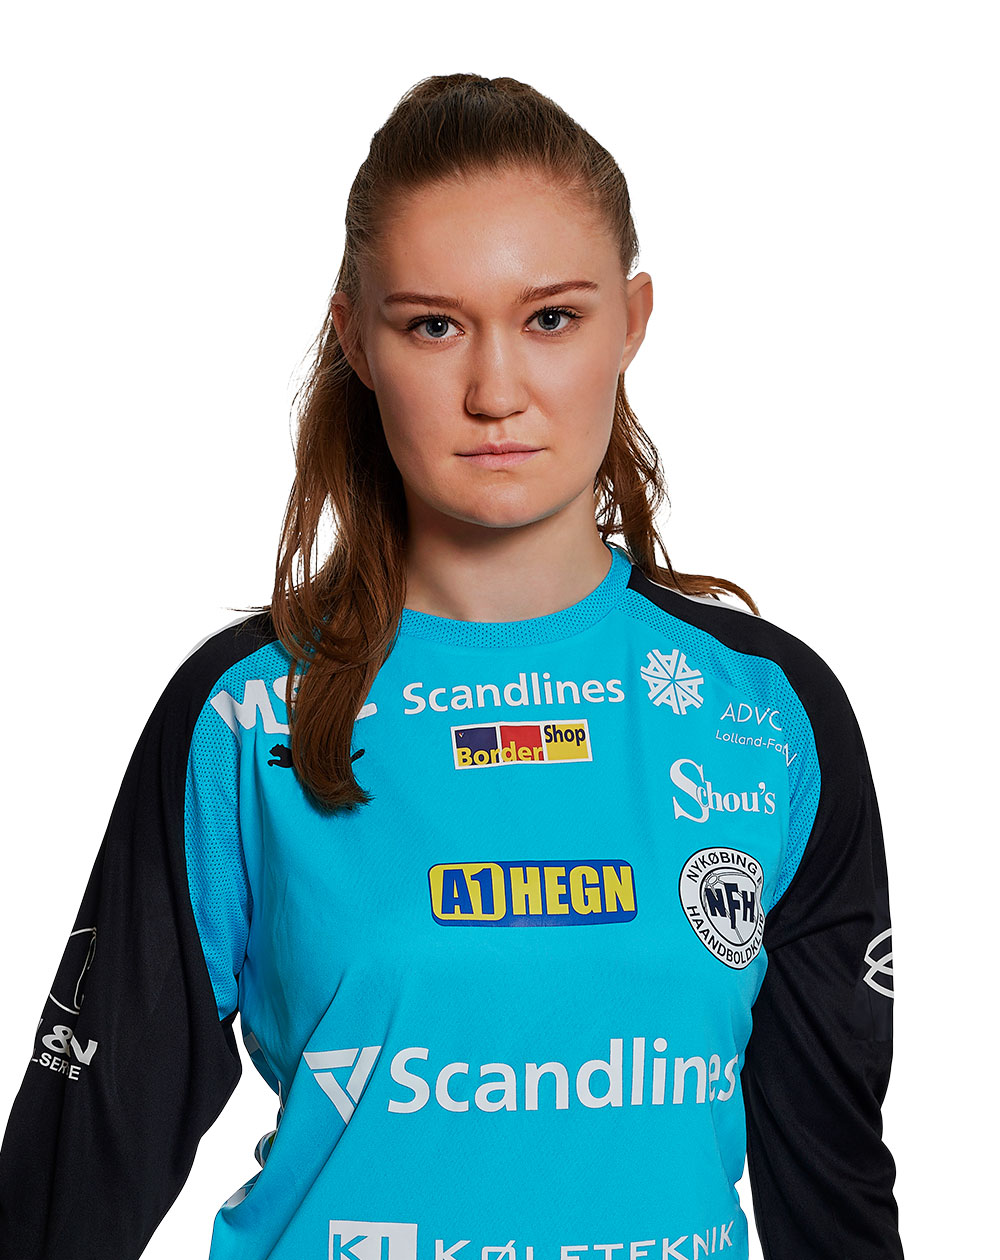 Annika Fríðheim Petersen